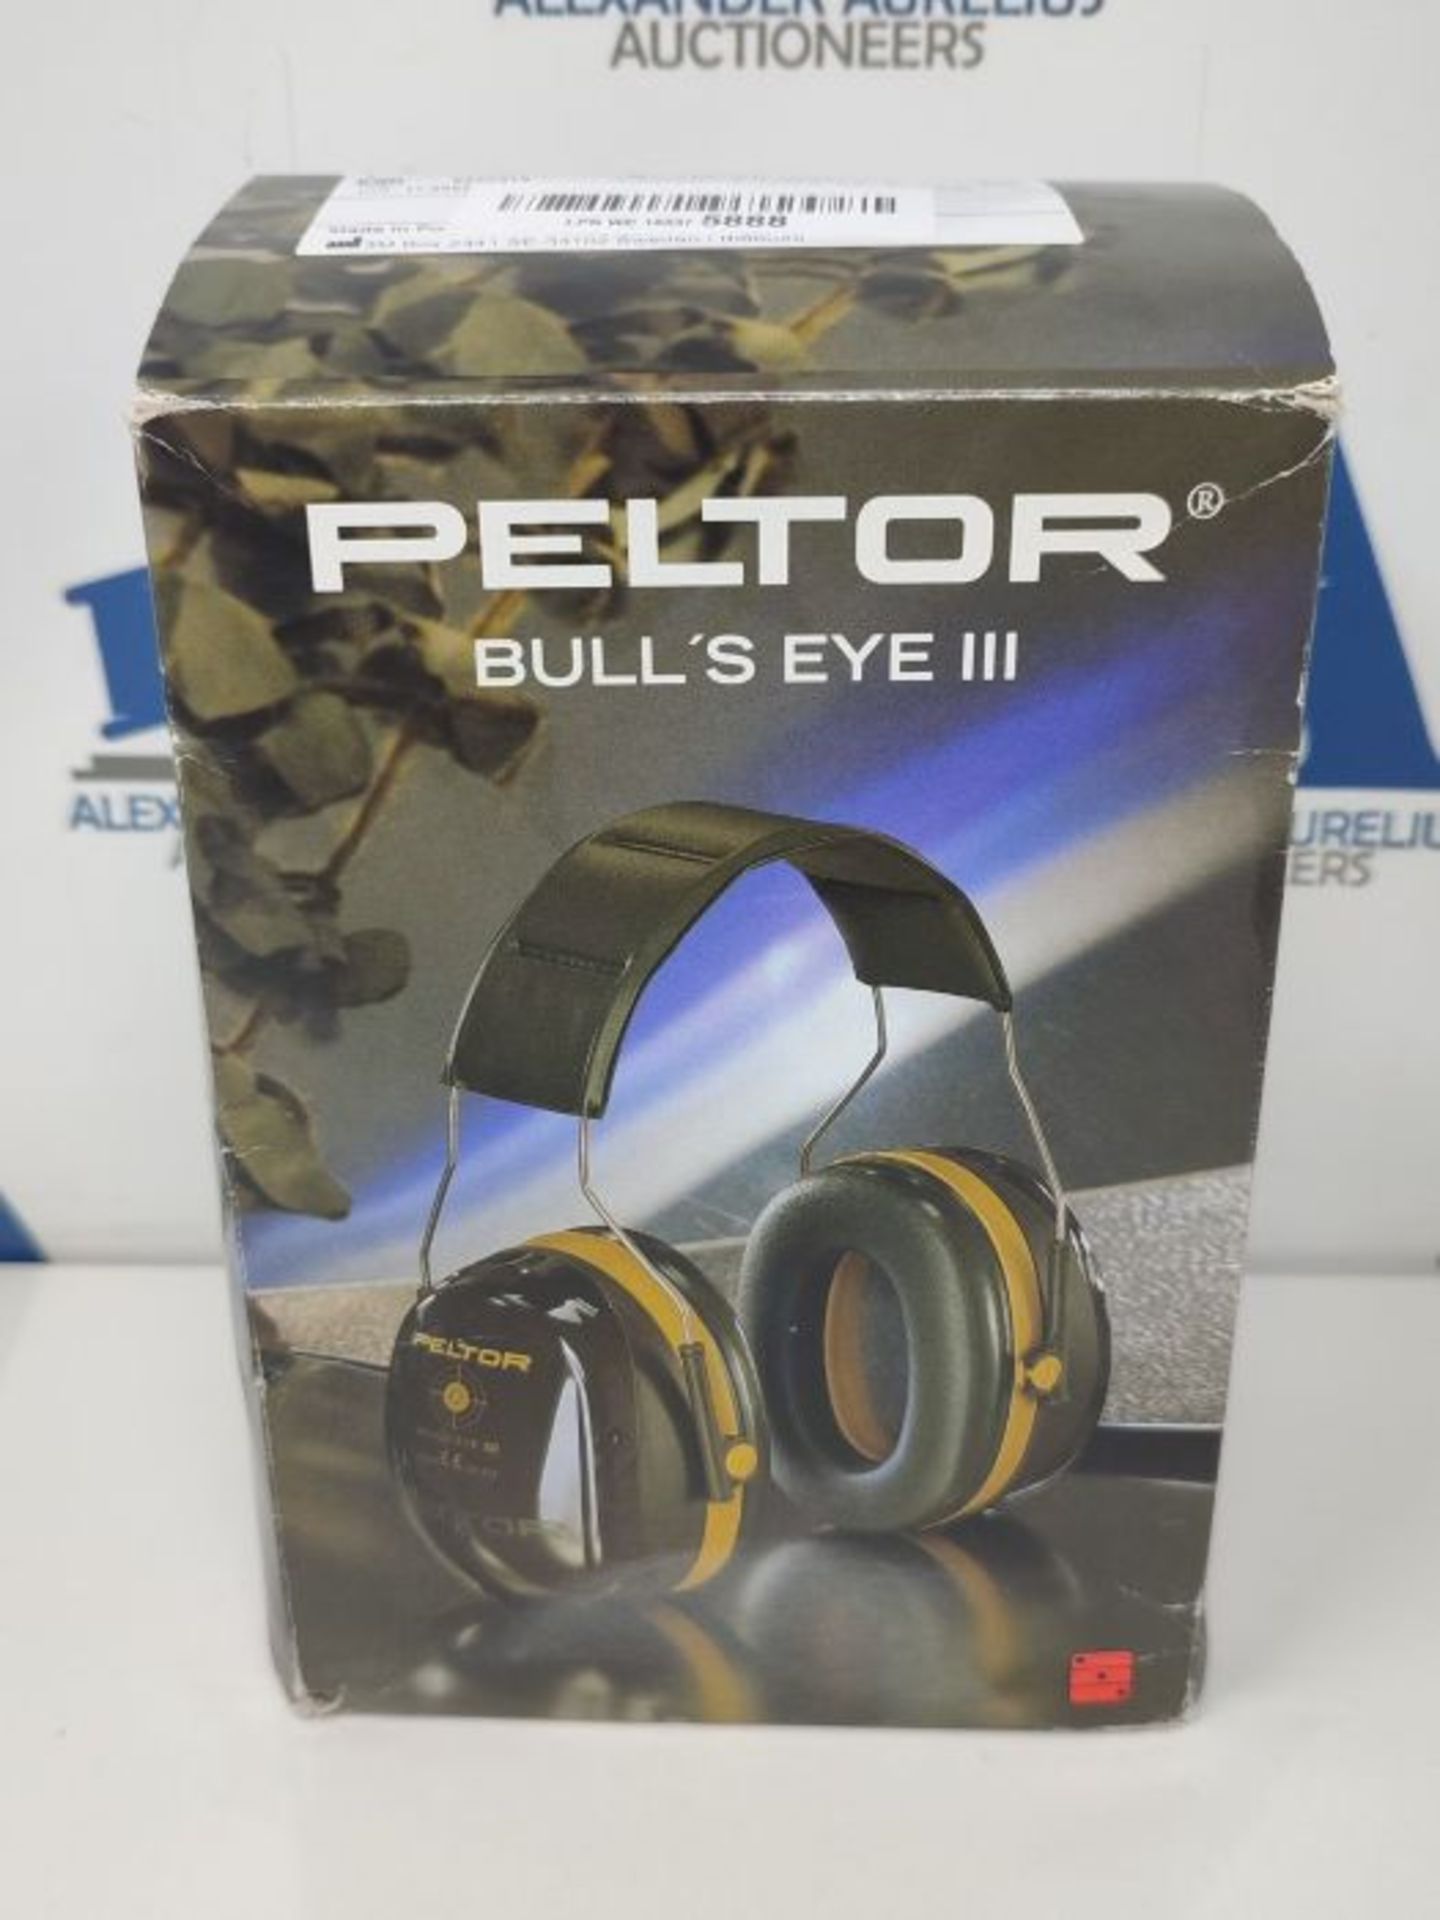 Peltor 7000107979 3M PELTOR Bull's Eye III Earmuffs, 35 dB, Military Green, Headband, - Image 2 of 3